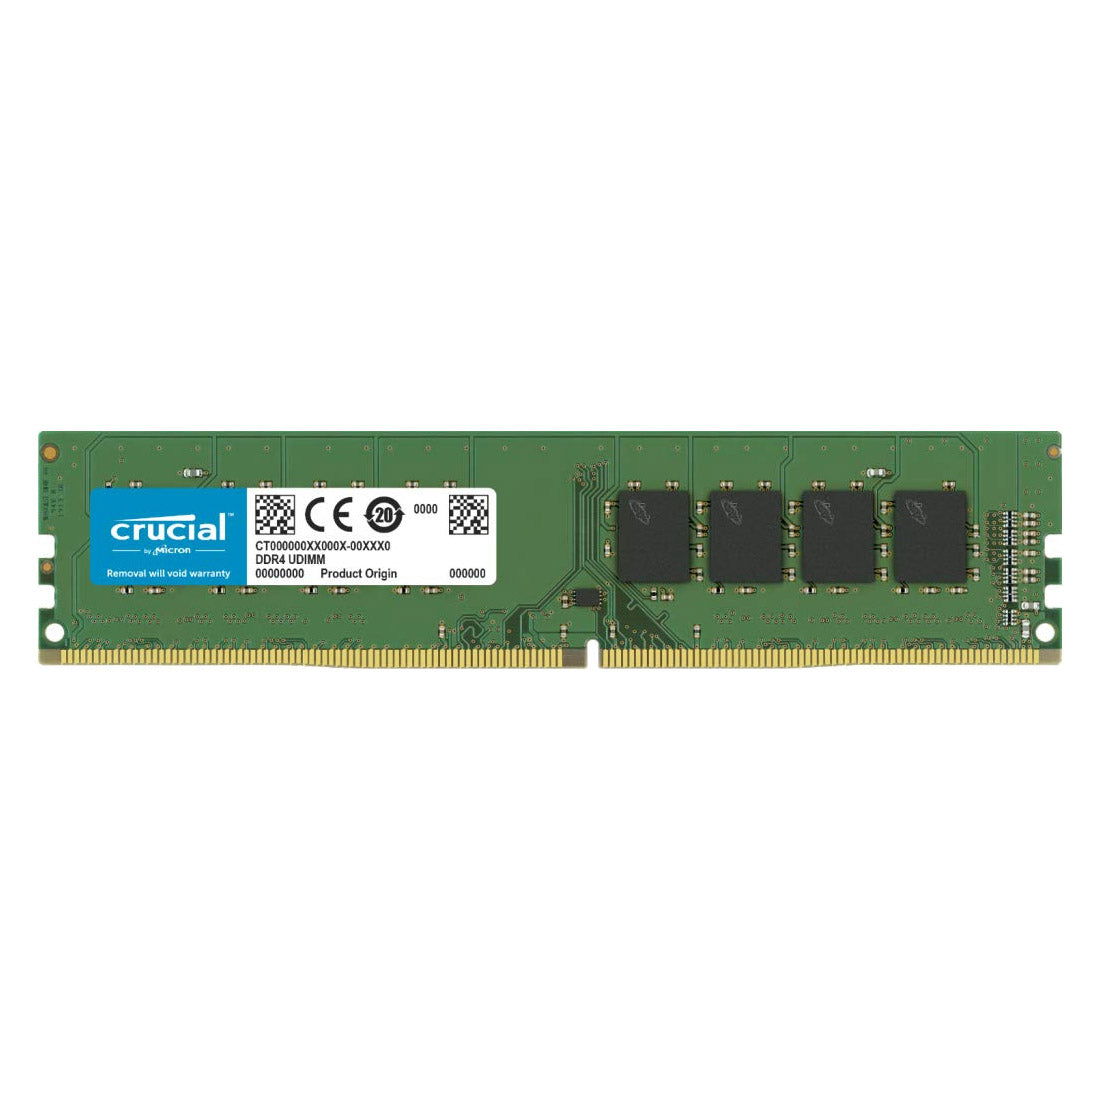 Crucial 8GB DDR4 2666MHz RAM CL19 Desktop Memory